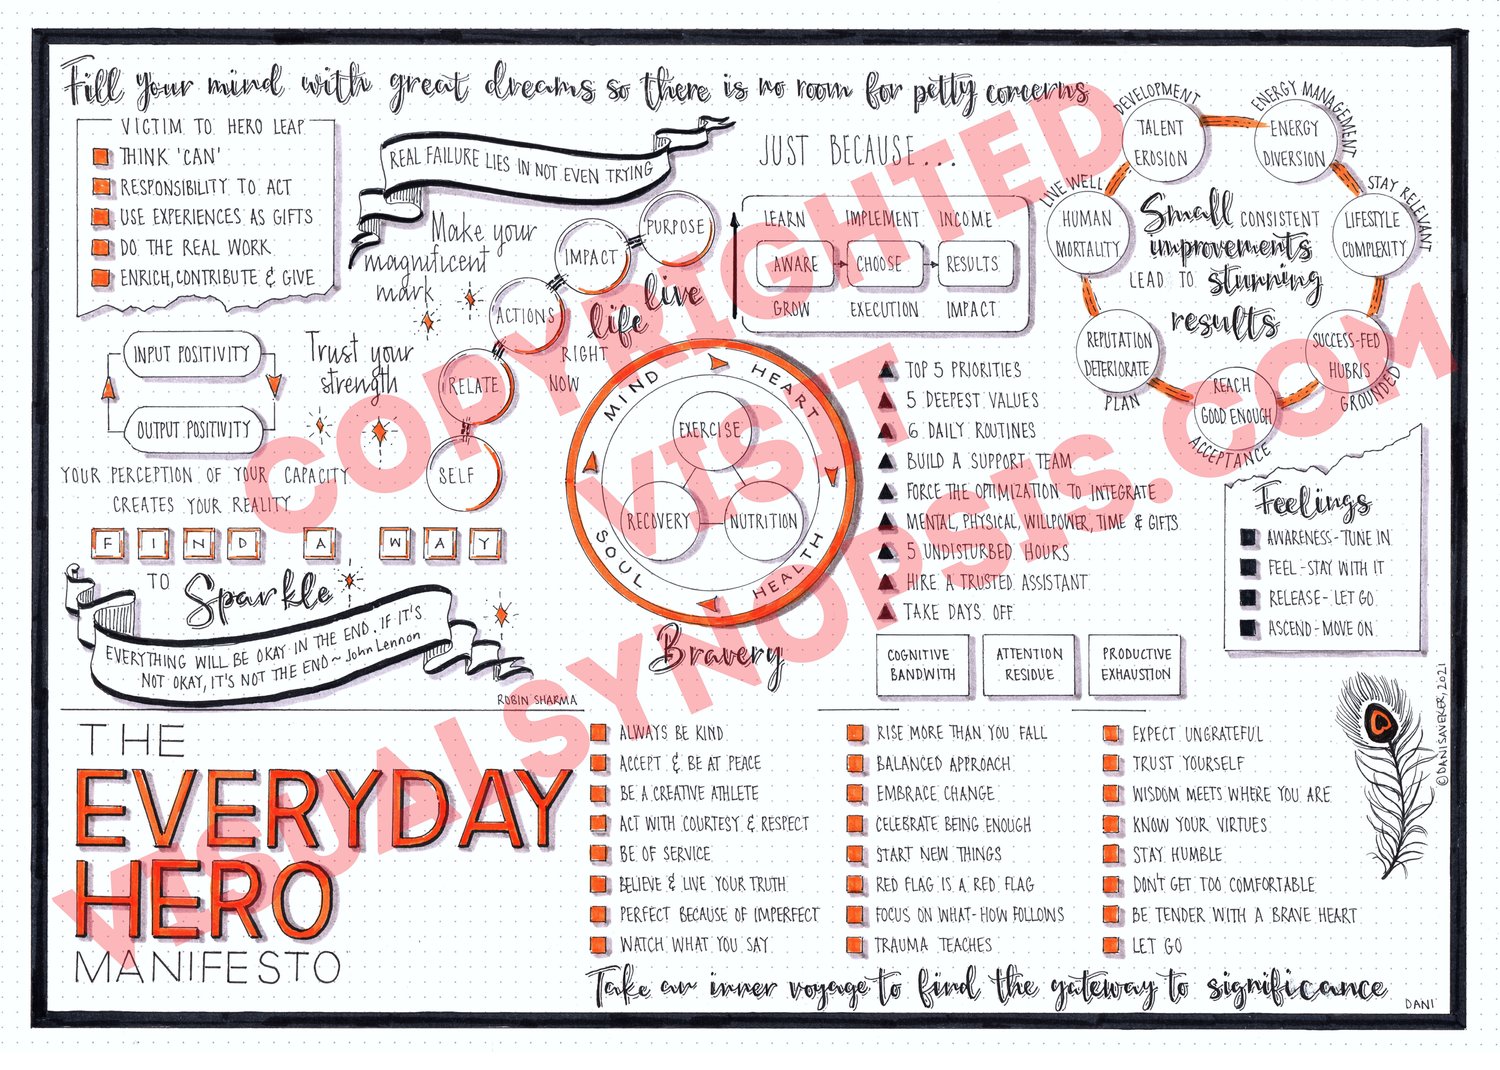 everyday hero manifesto pdf free download